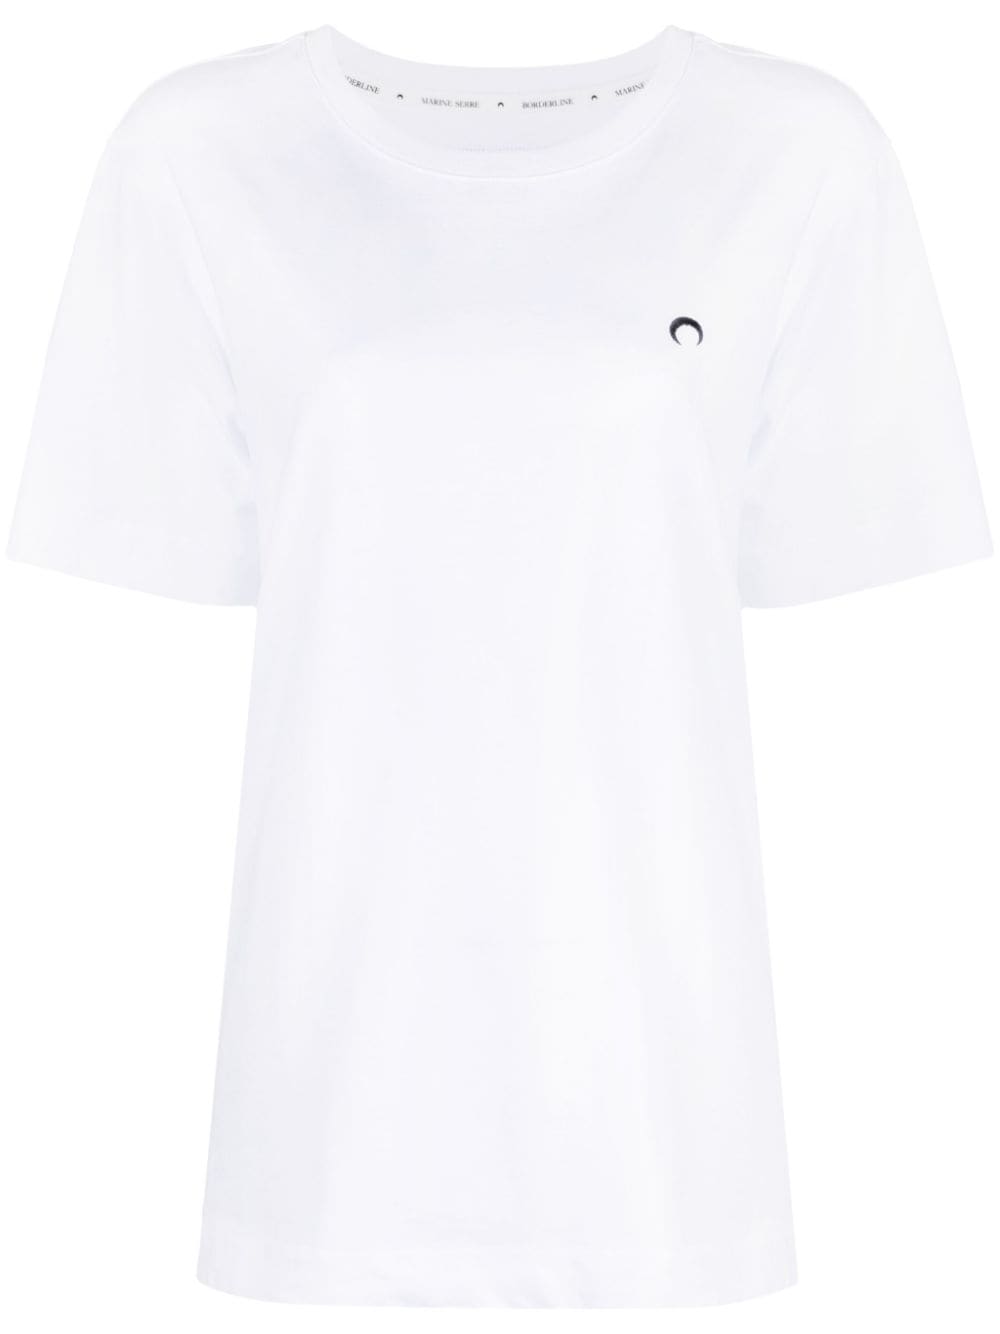 Marine Serre Crescent Moon embroidered T-shirt - White